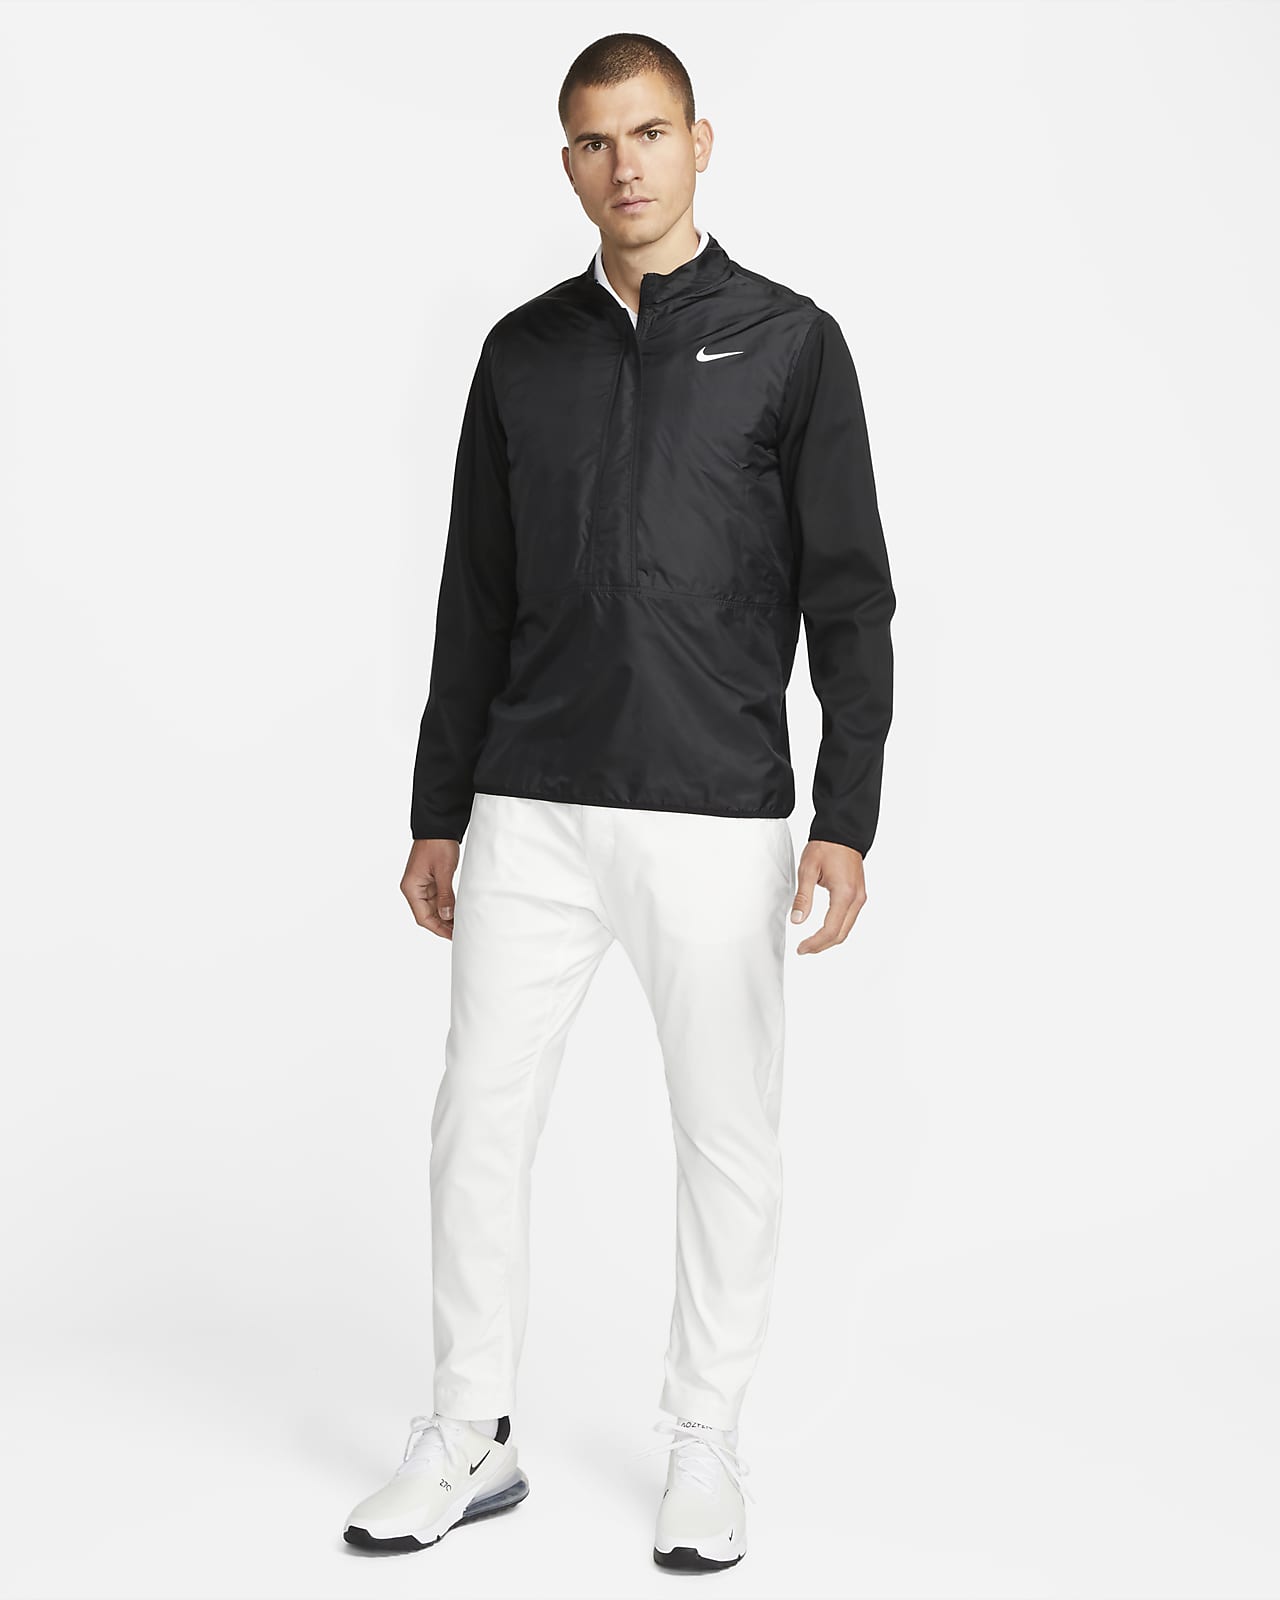 ADV Men\'s 1/2-Zip Golf Therma-FIT Nike Jacket. Repel